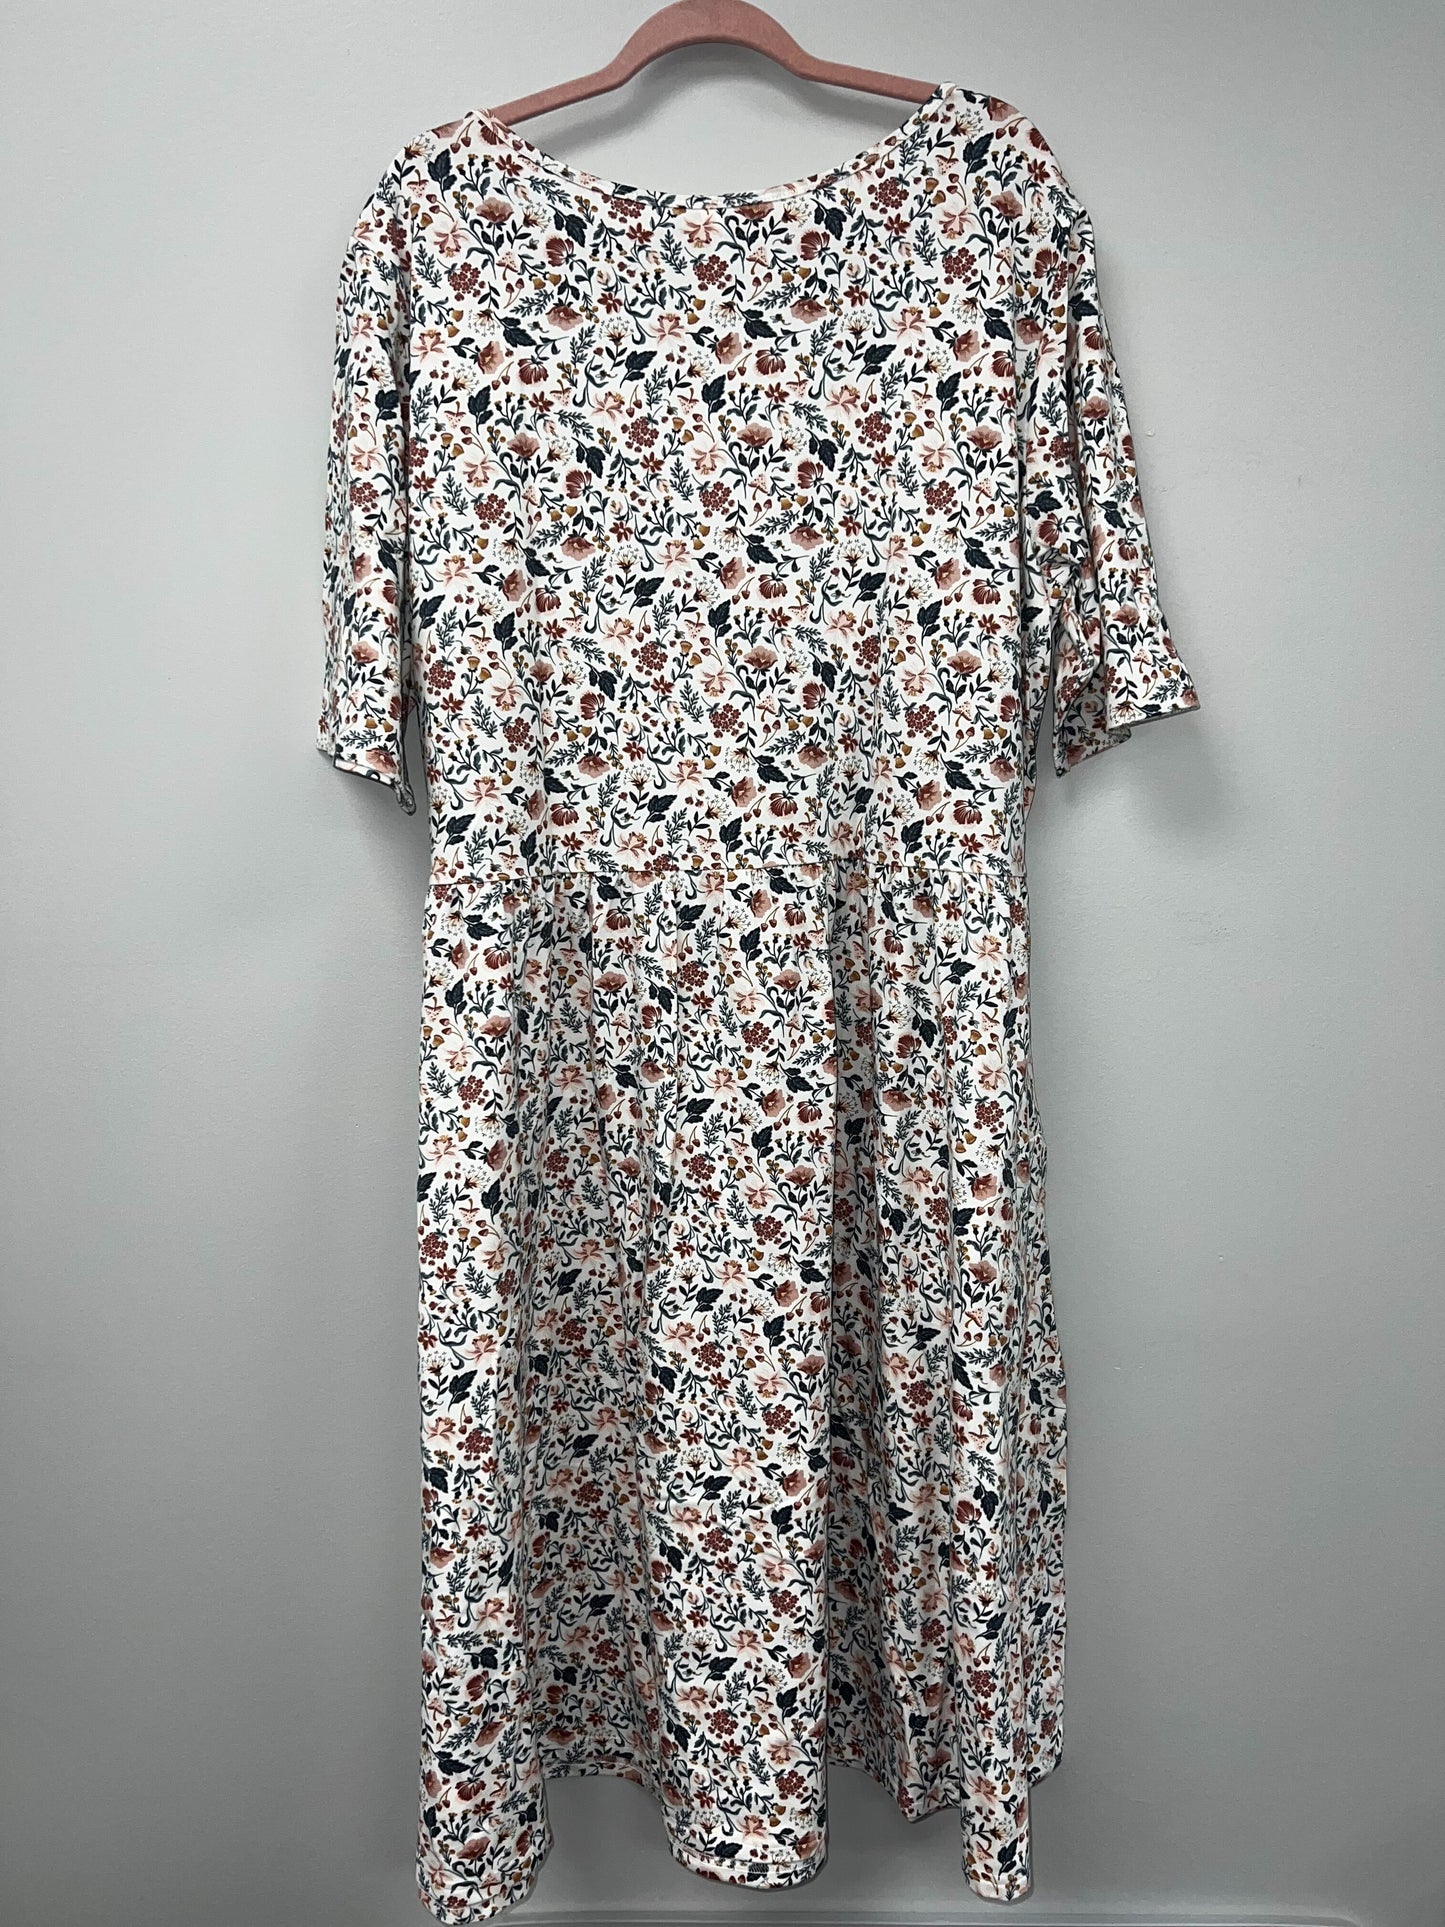 Outlet 5695 - Latched Mama Classic Cotton Nursing Dress - Wonderland Floral - 3X